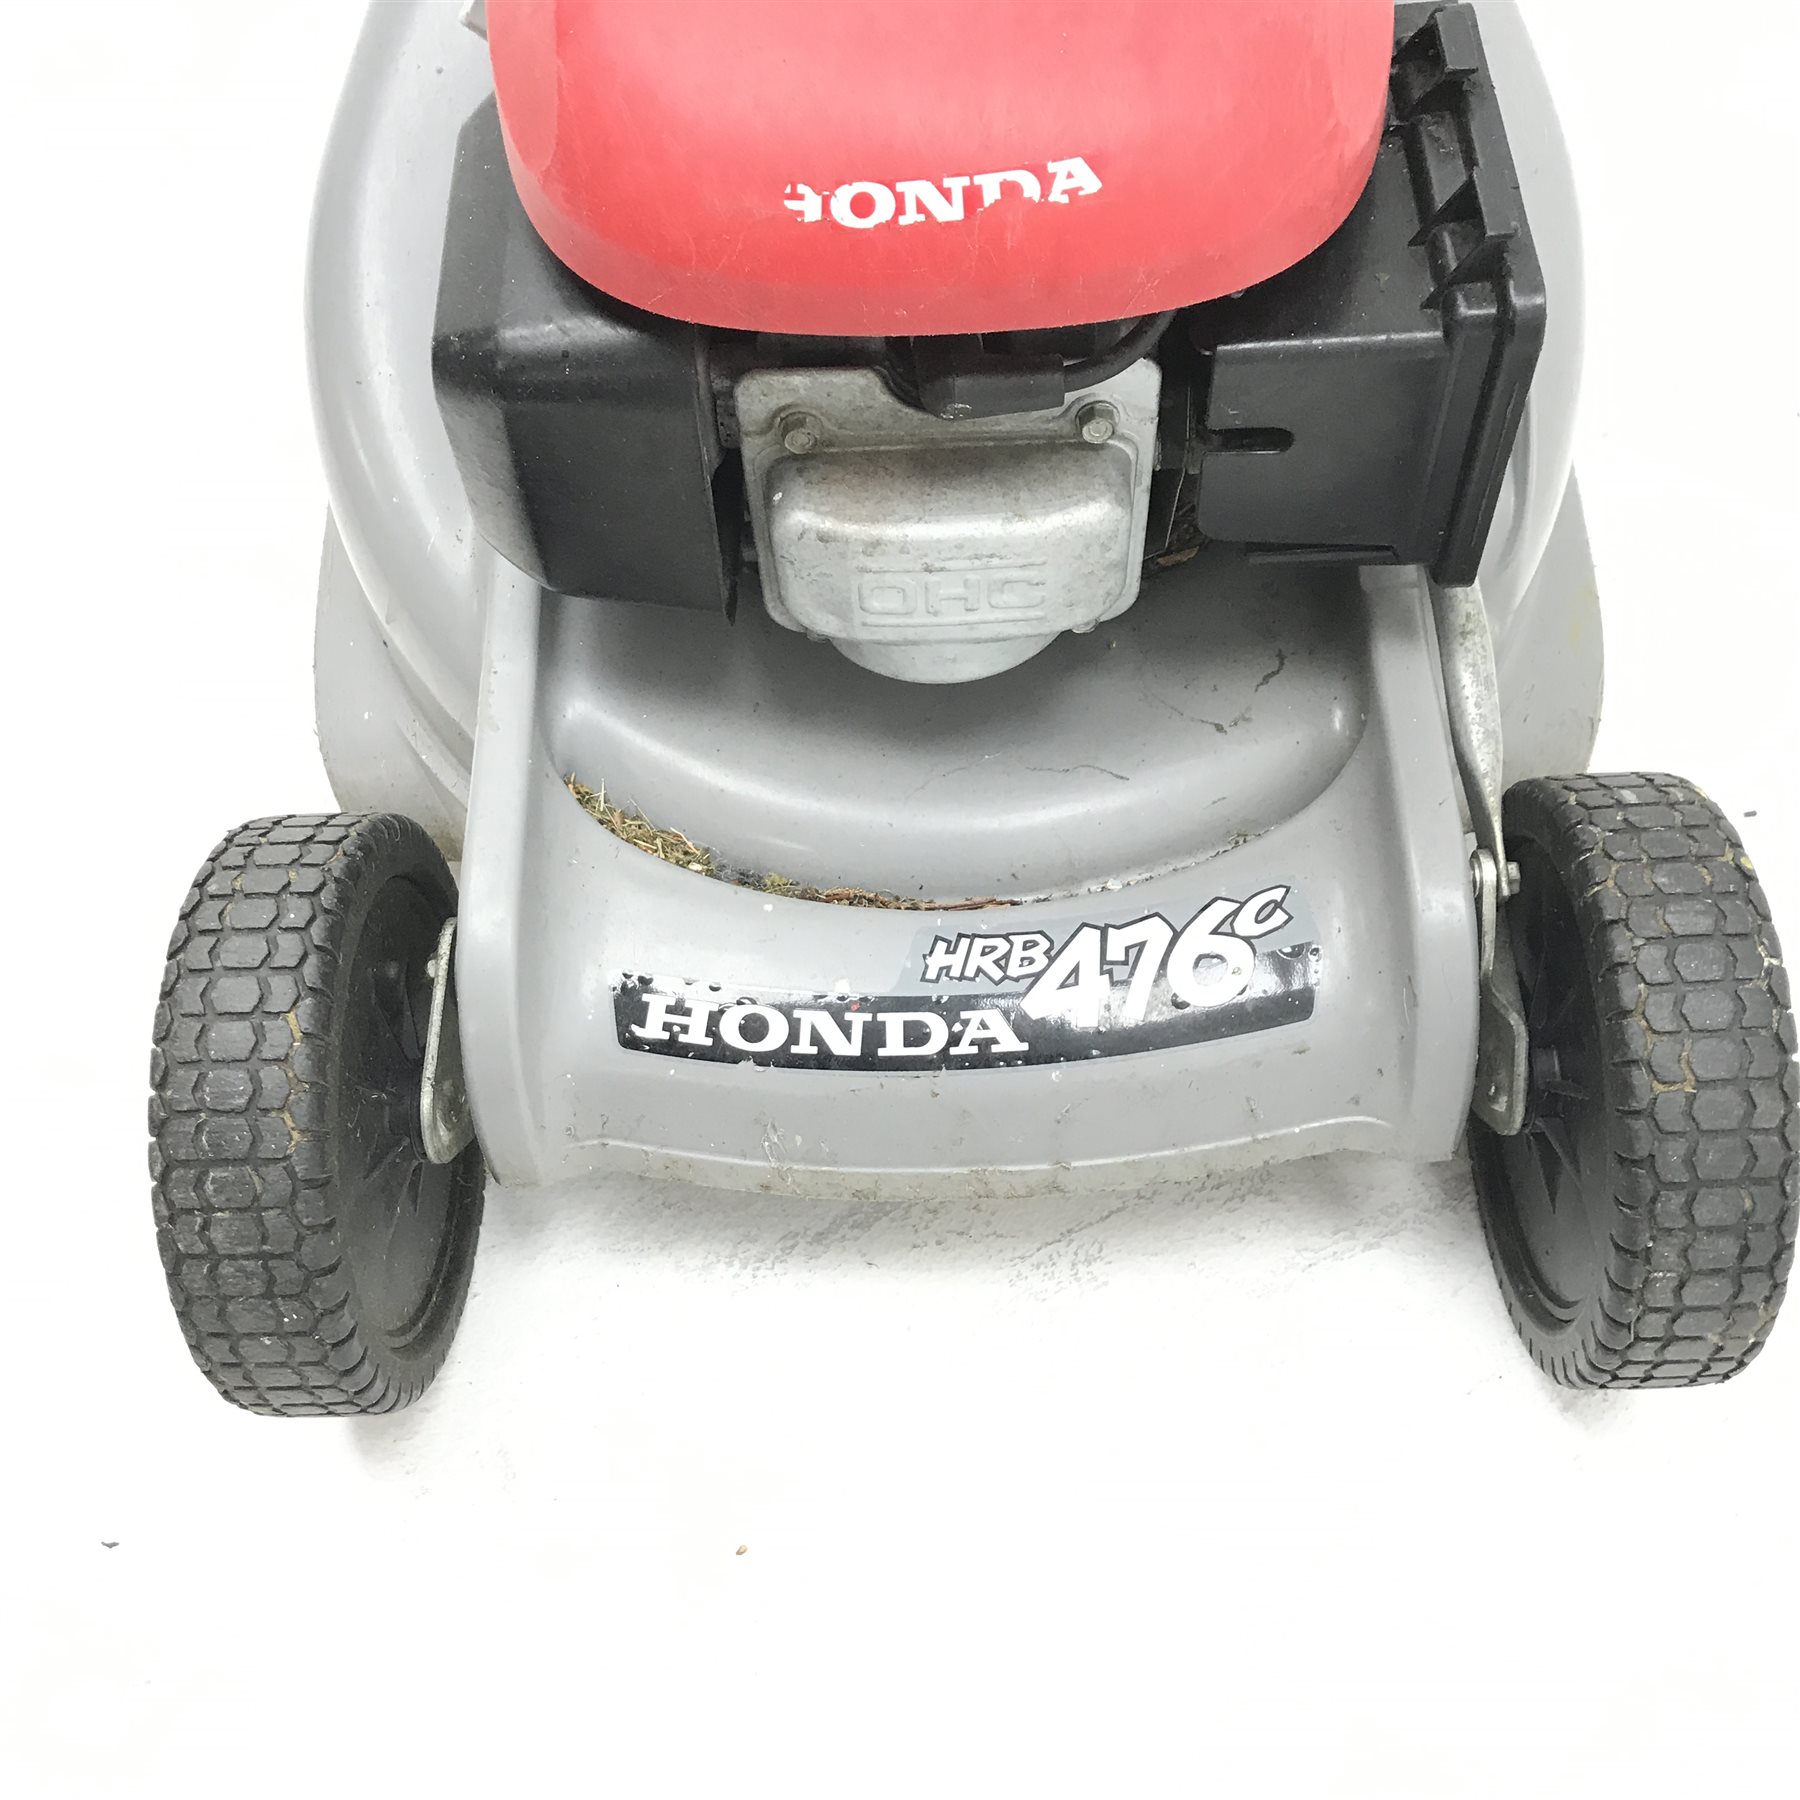 Honda HRB476C petrol lawnmower - Image 3 of 3